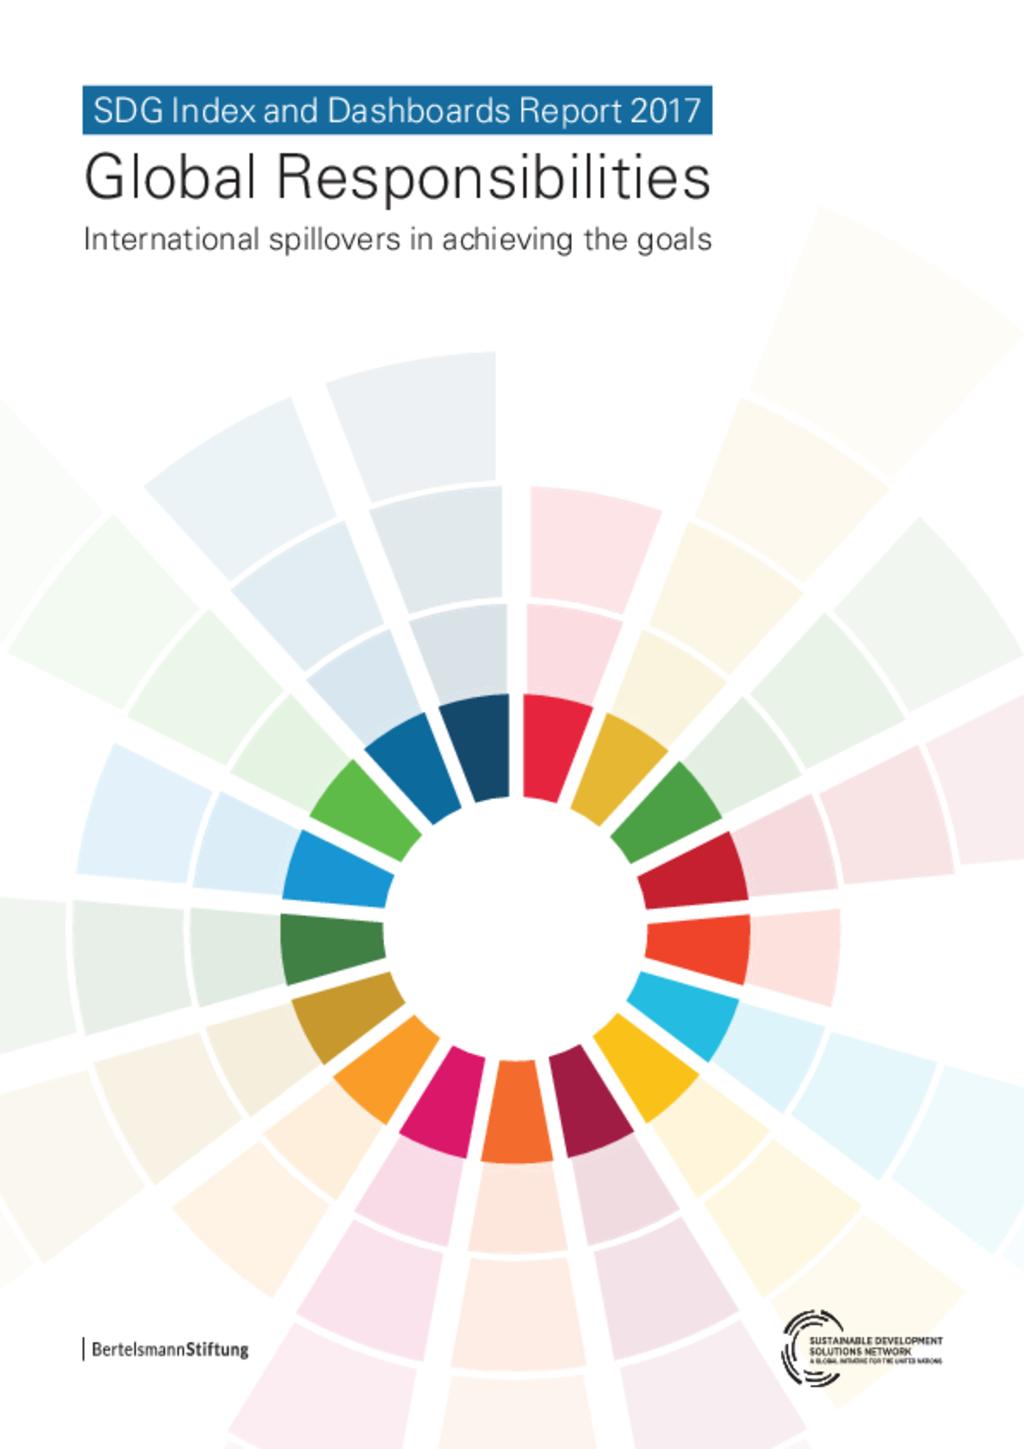 SDG report card